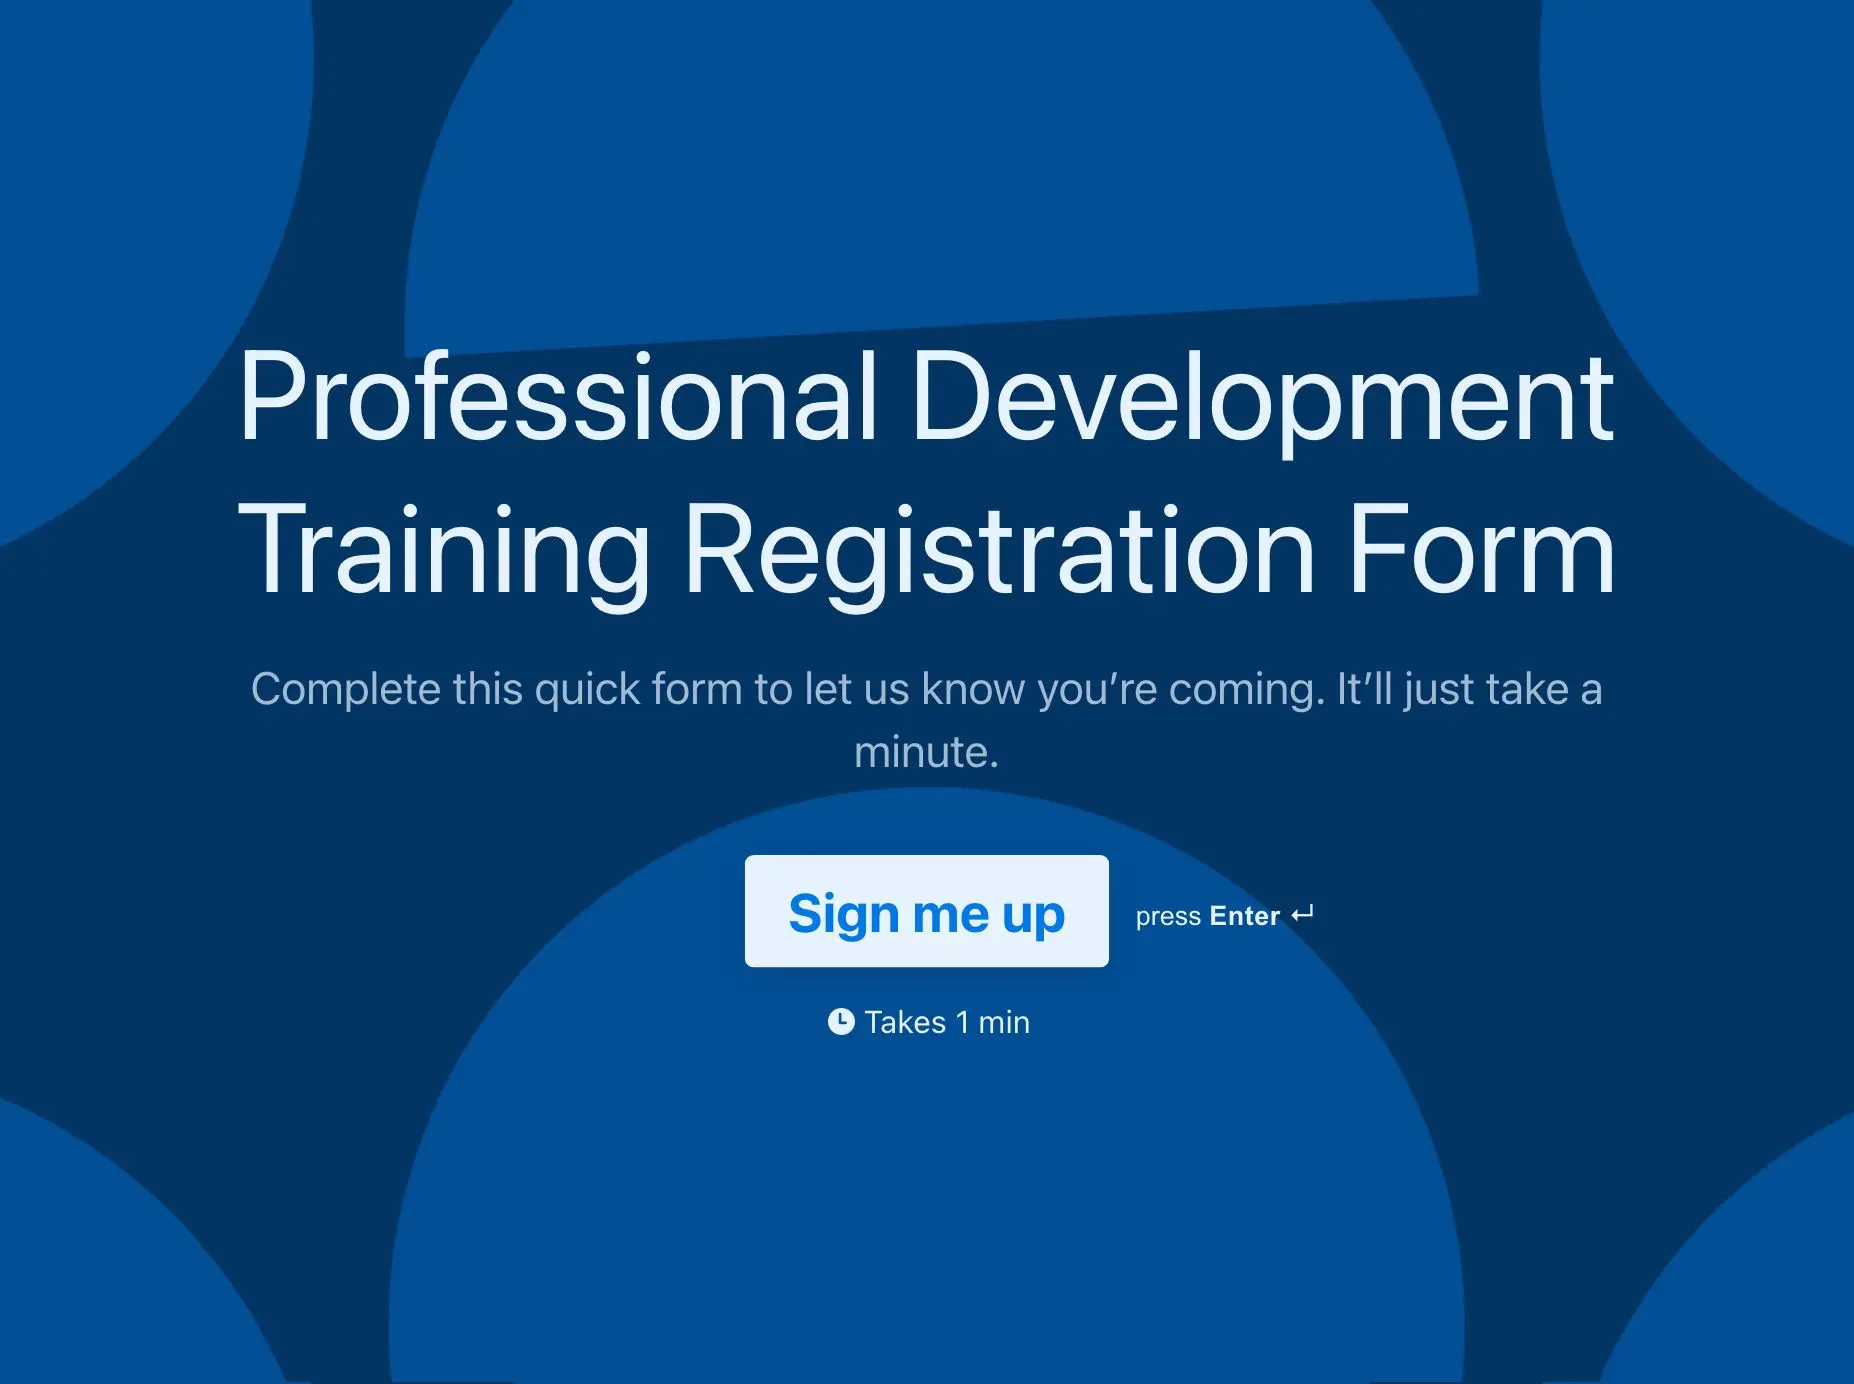 Professional Development Training Registration Form Template Hero